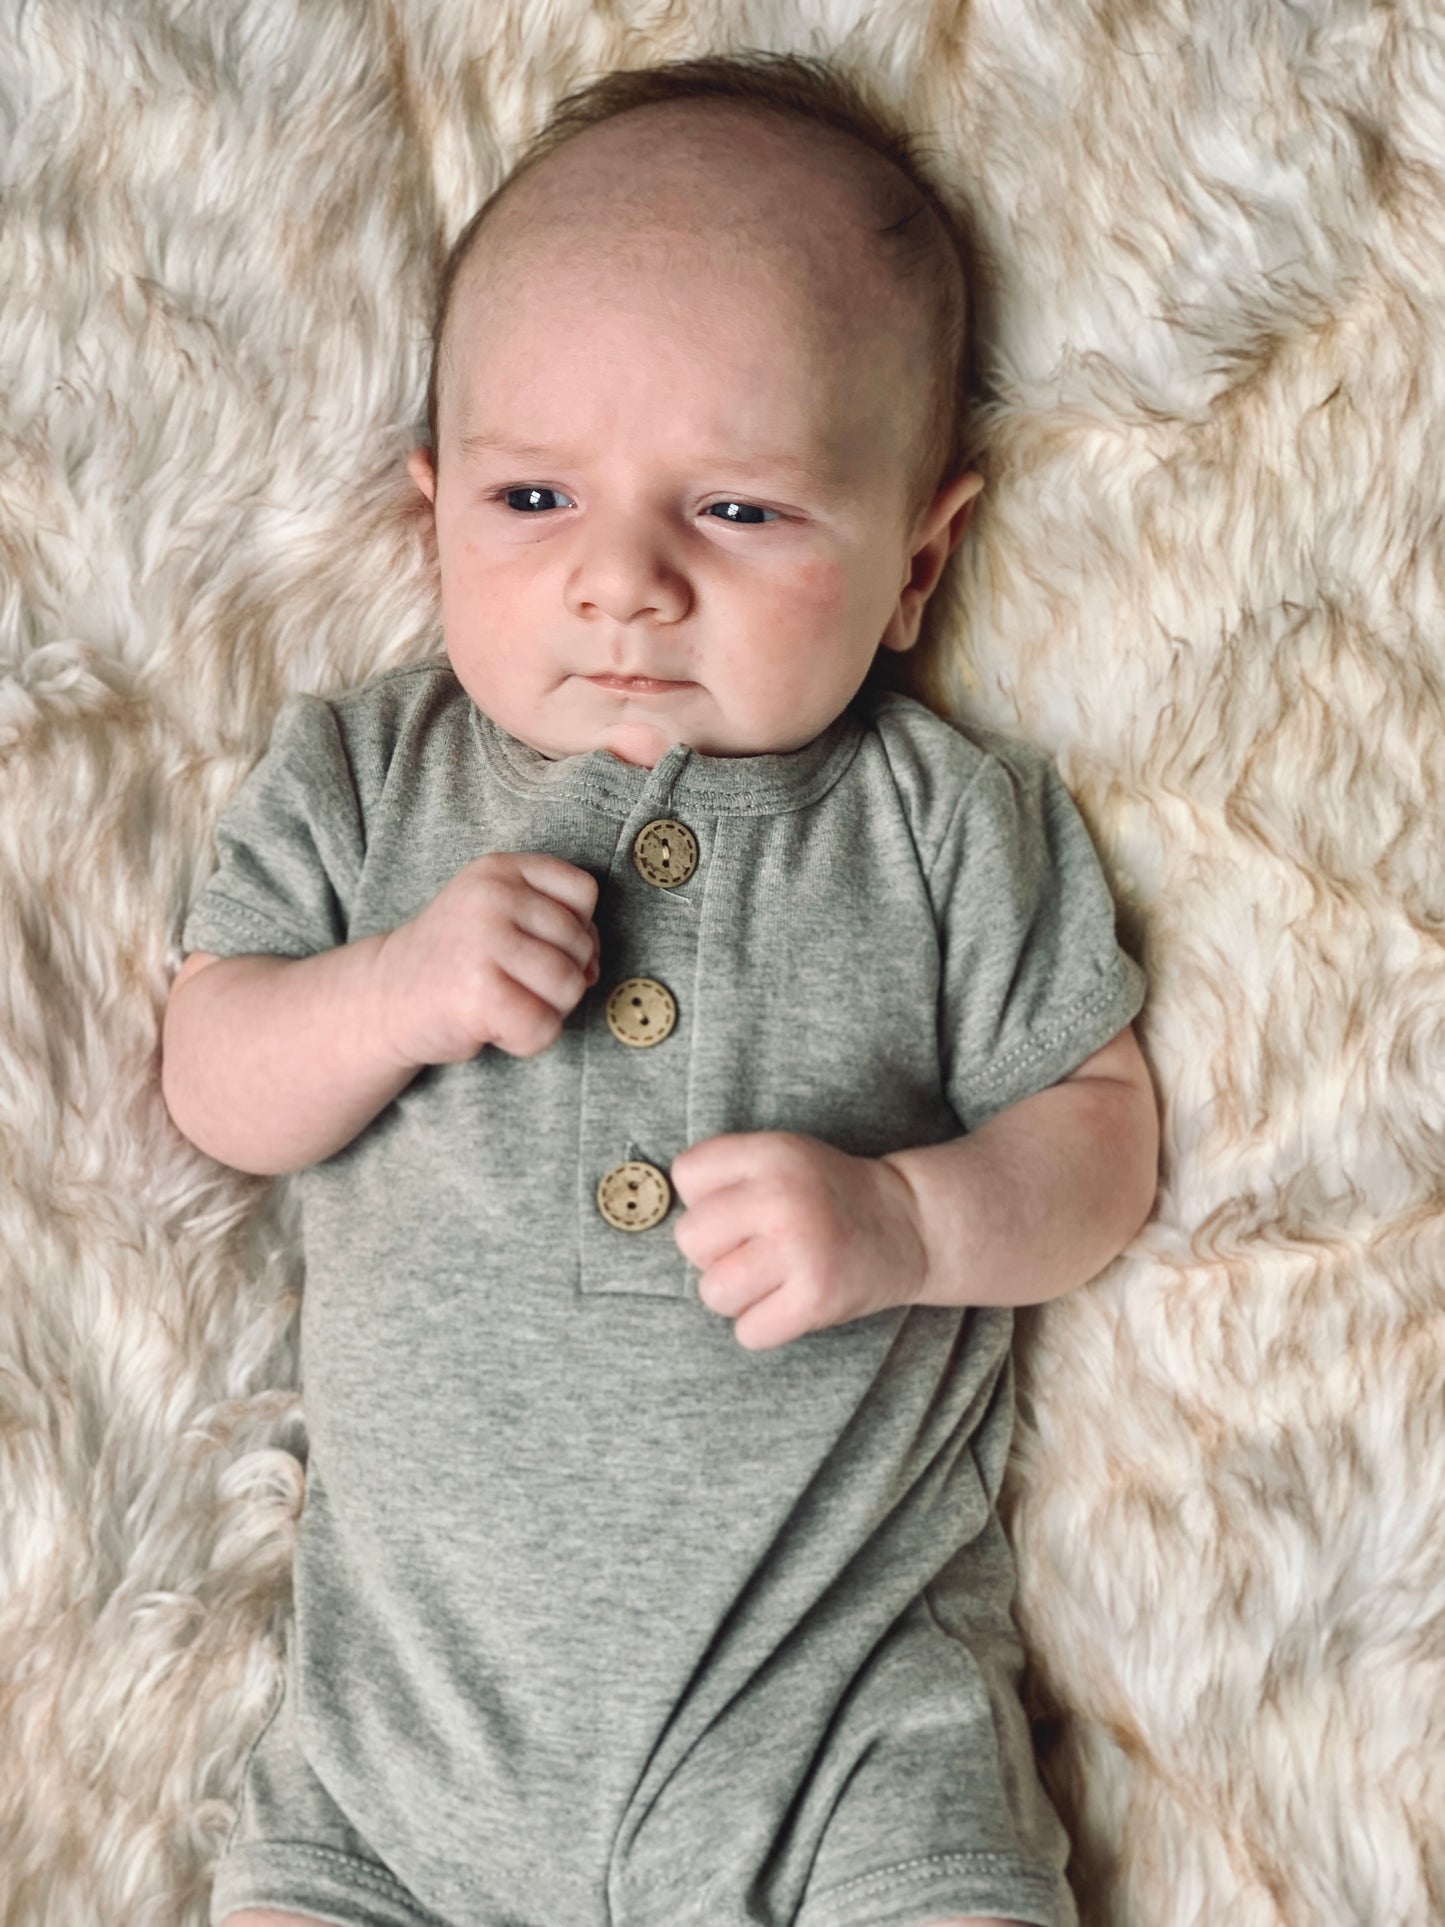 Austin Baby Toddler Romper: Gray